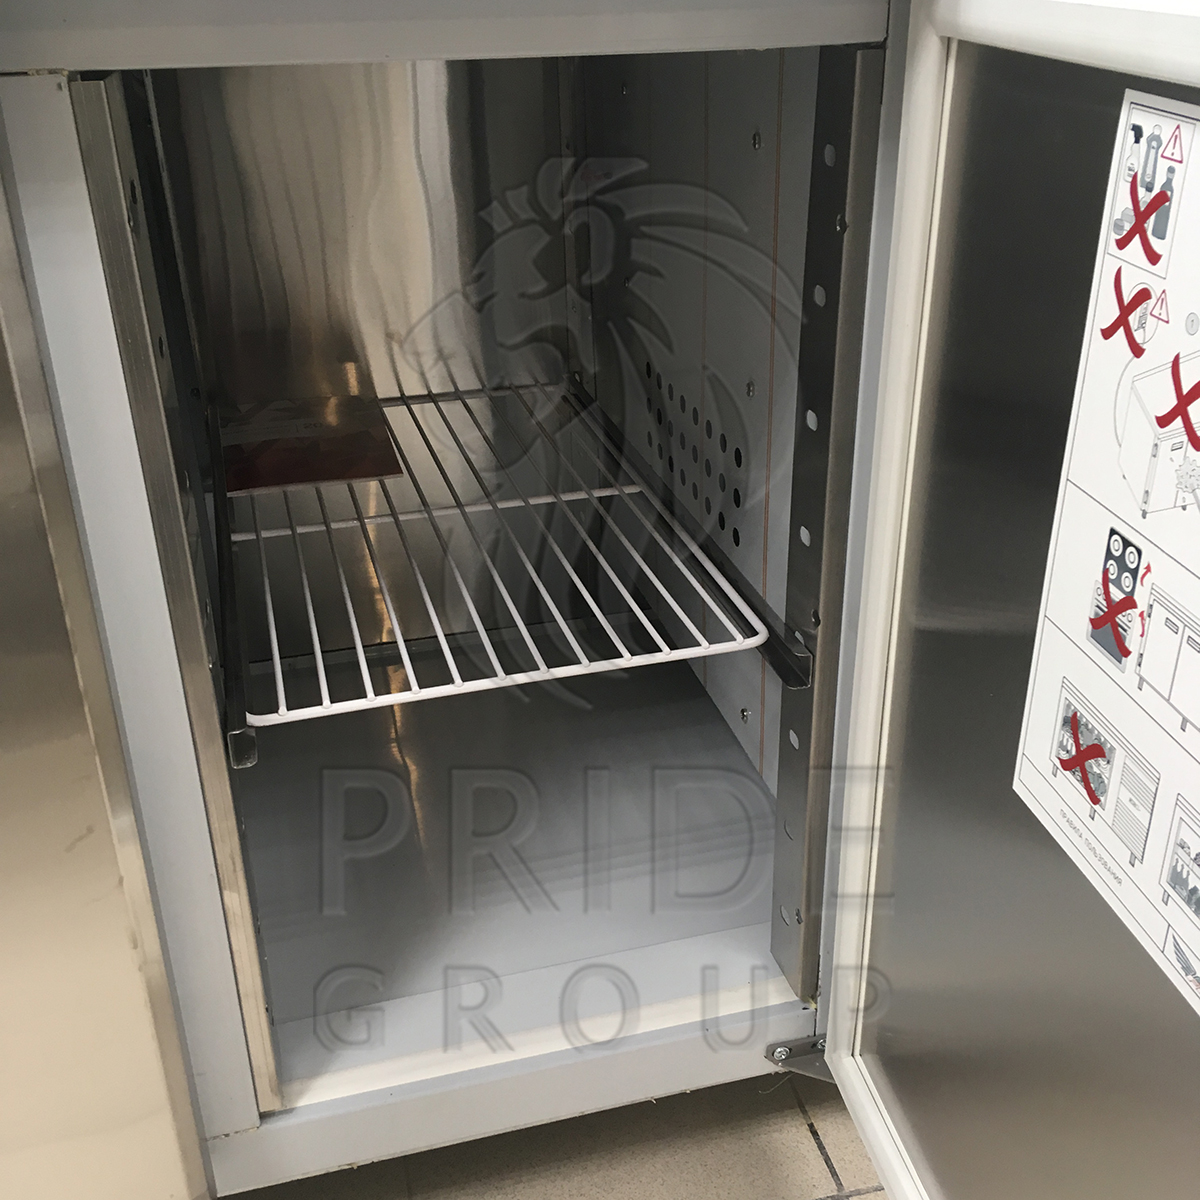 картинка Стол холодильный Finist УХС-700-1/4 универсальный 1810х700х850 мм